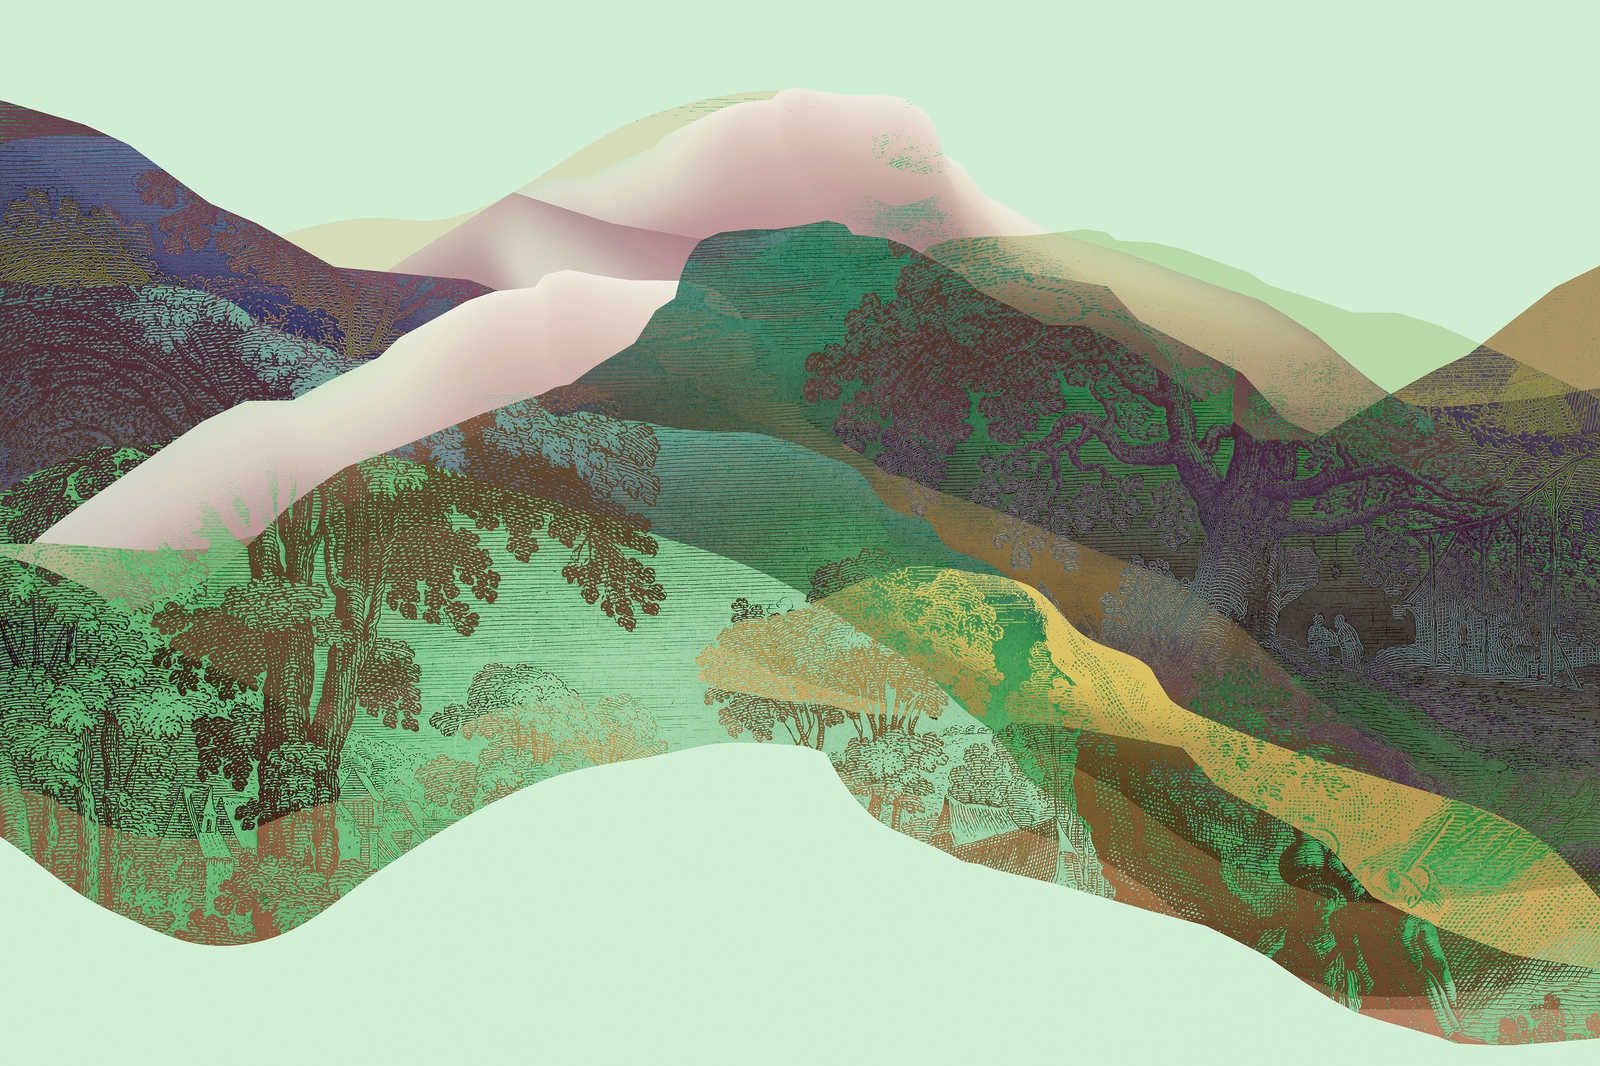             Magic Mountain 3 - Leinwandbild grüne Berge modernes Design – 0,90 m x 0,60 m
        